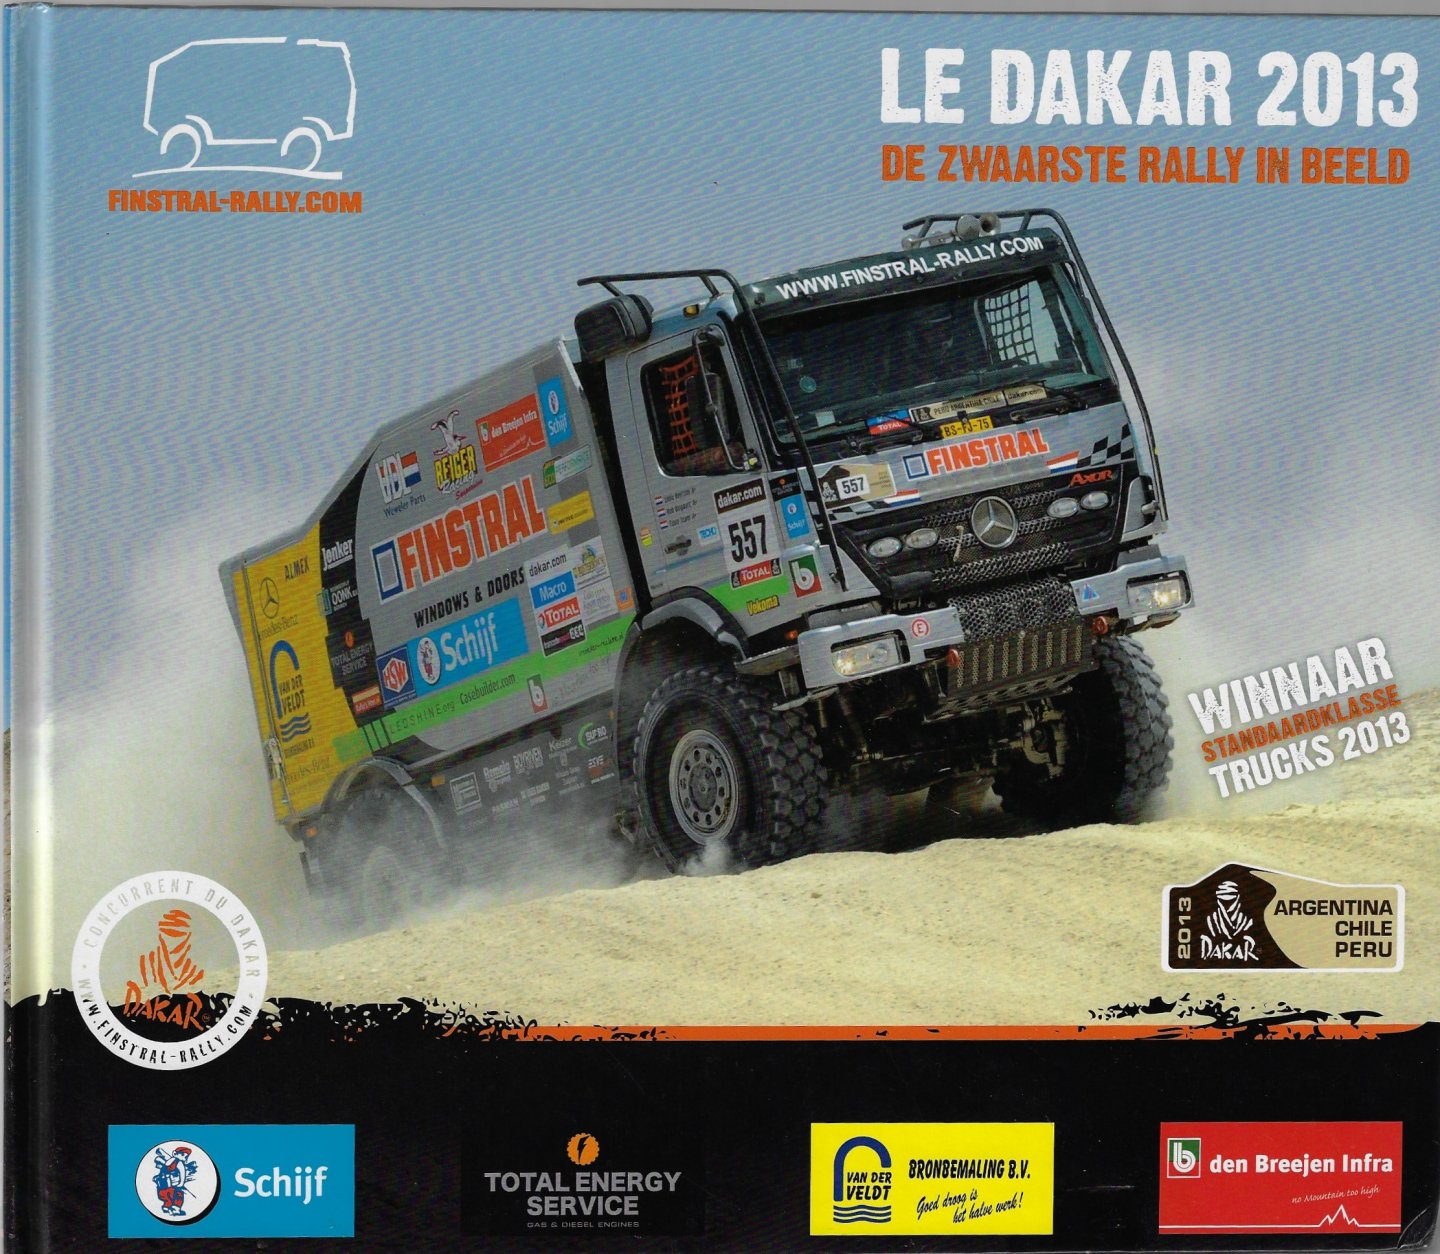 Several writers - Le Dakar 2013  (Argentina Chile Peru) -De zwaarste rally in beeld